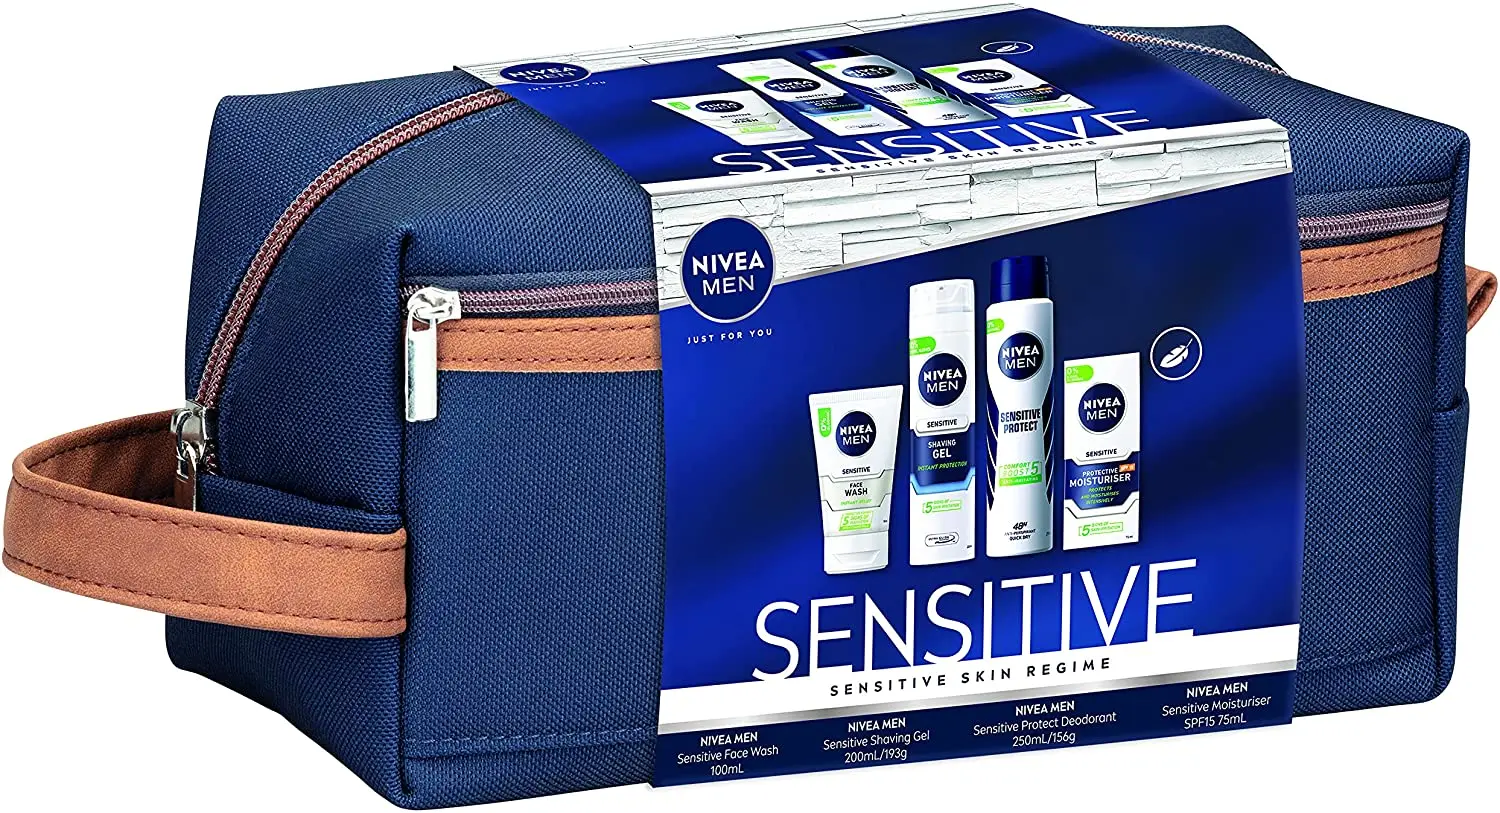 Nivea Sensitive Diet Gift Set for Men: $ 16.99 at Amazon